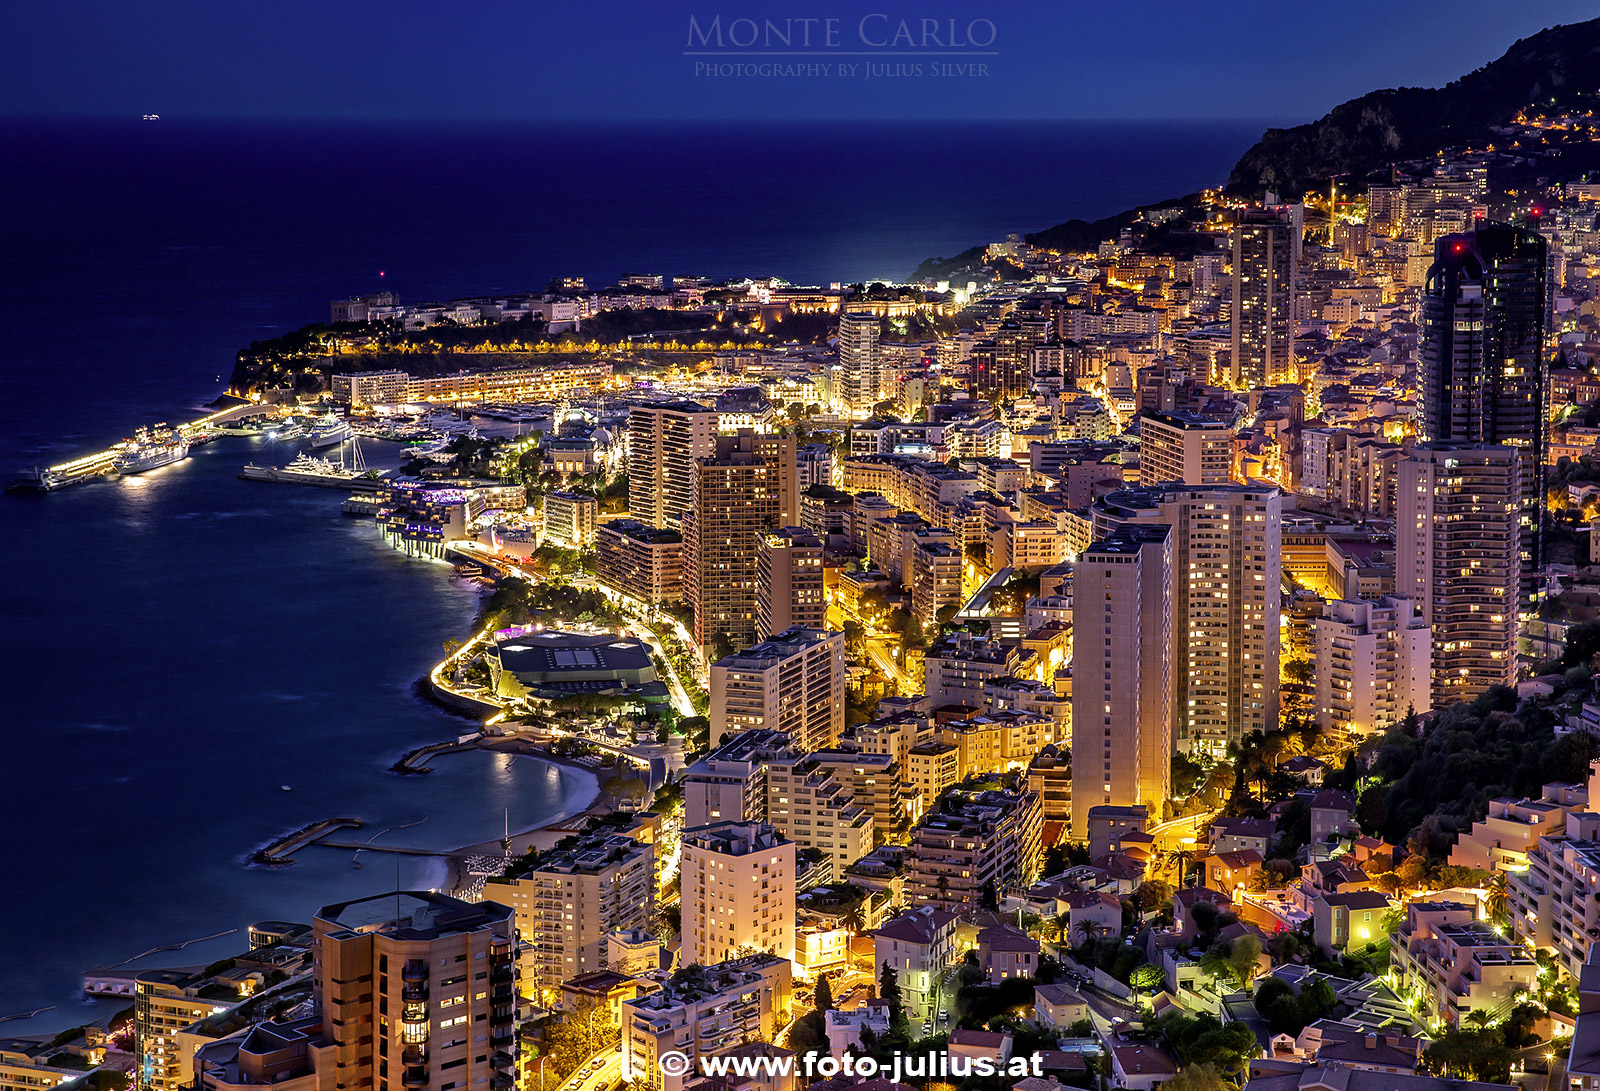 Monte_Carlo_004a.jpg, 838kB